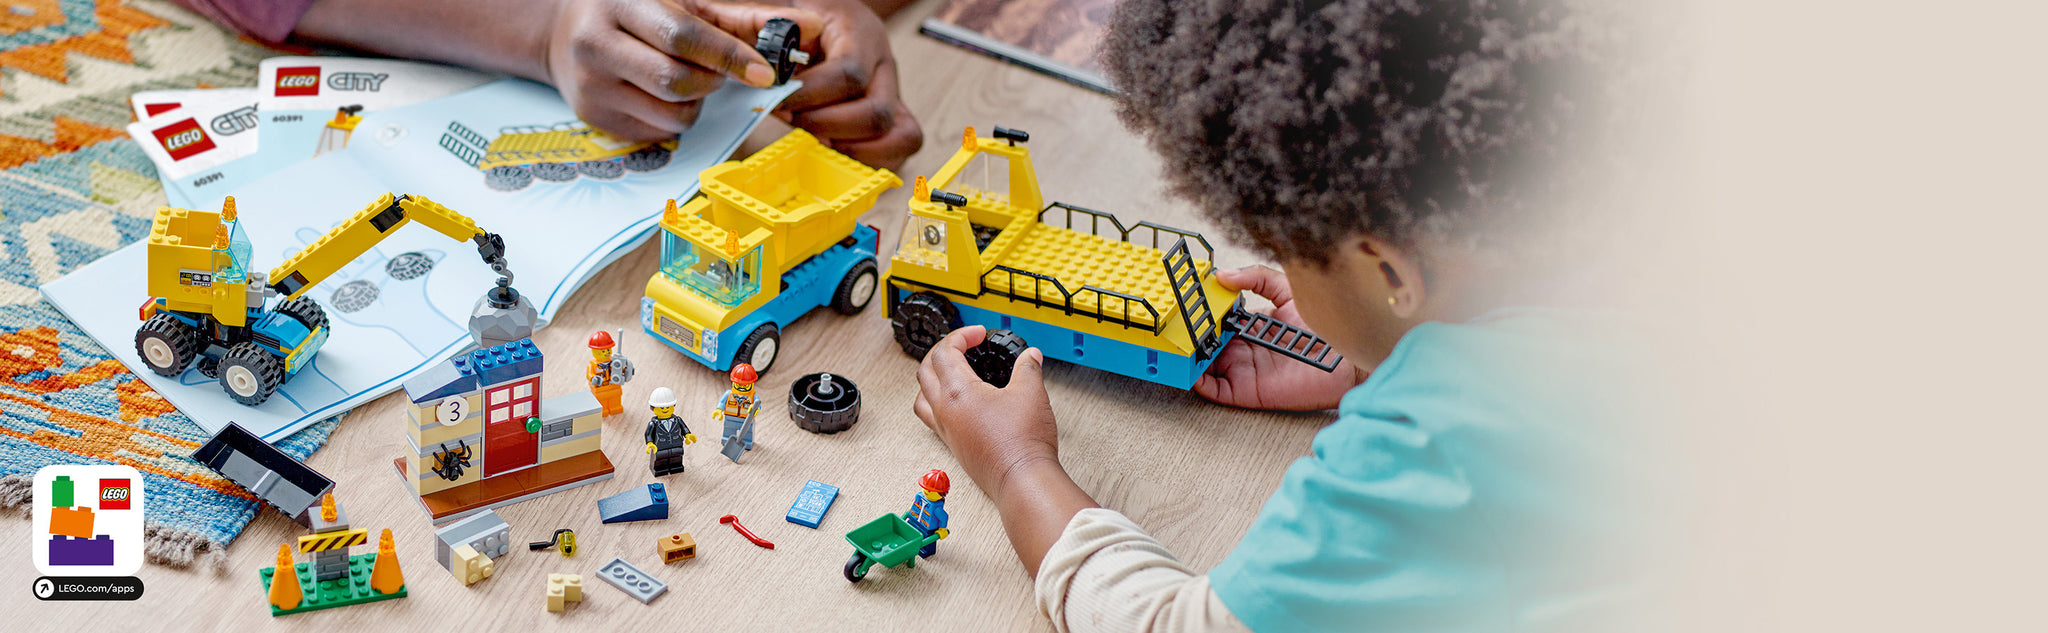 LEGO 60391 Dump truck, construction truck and demolition crane